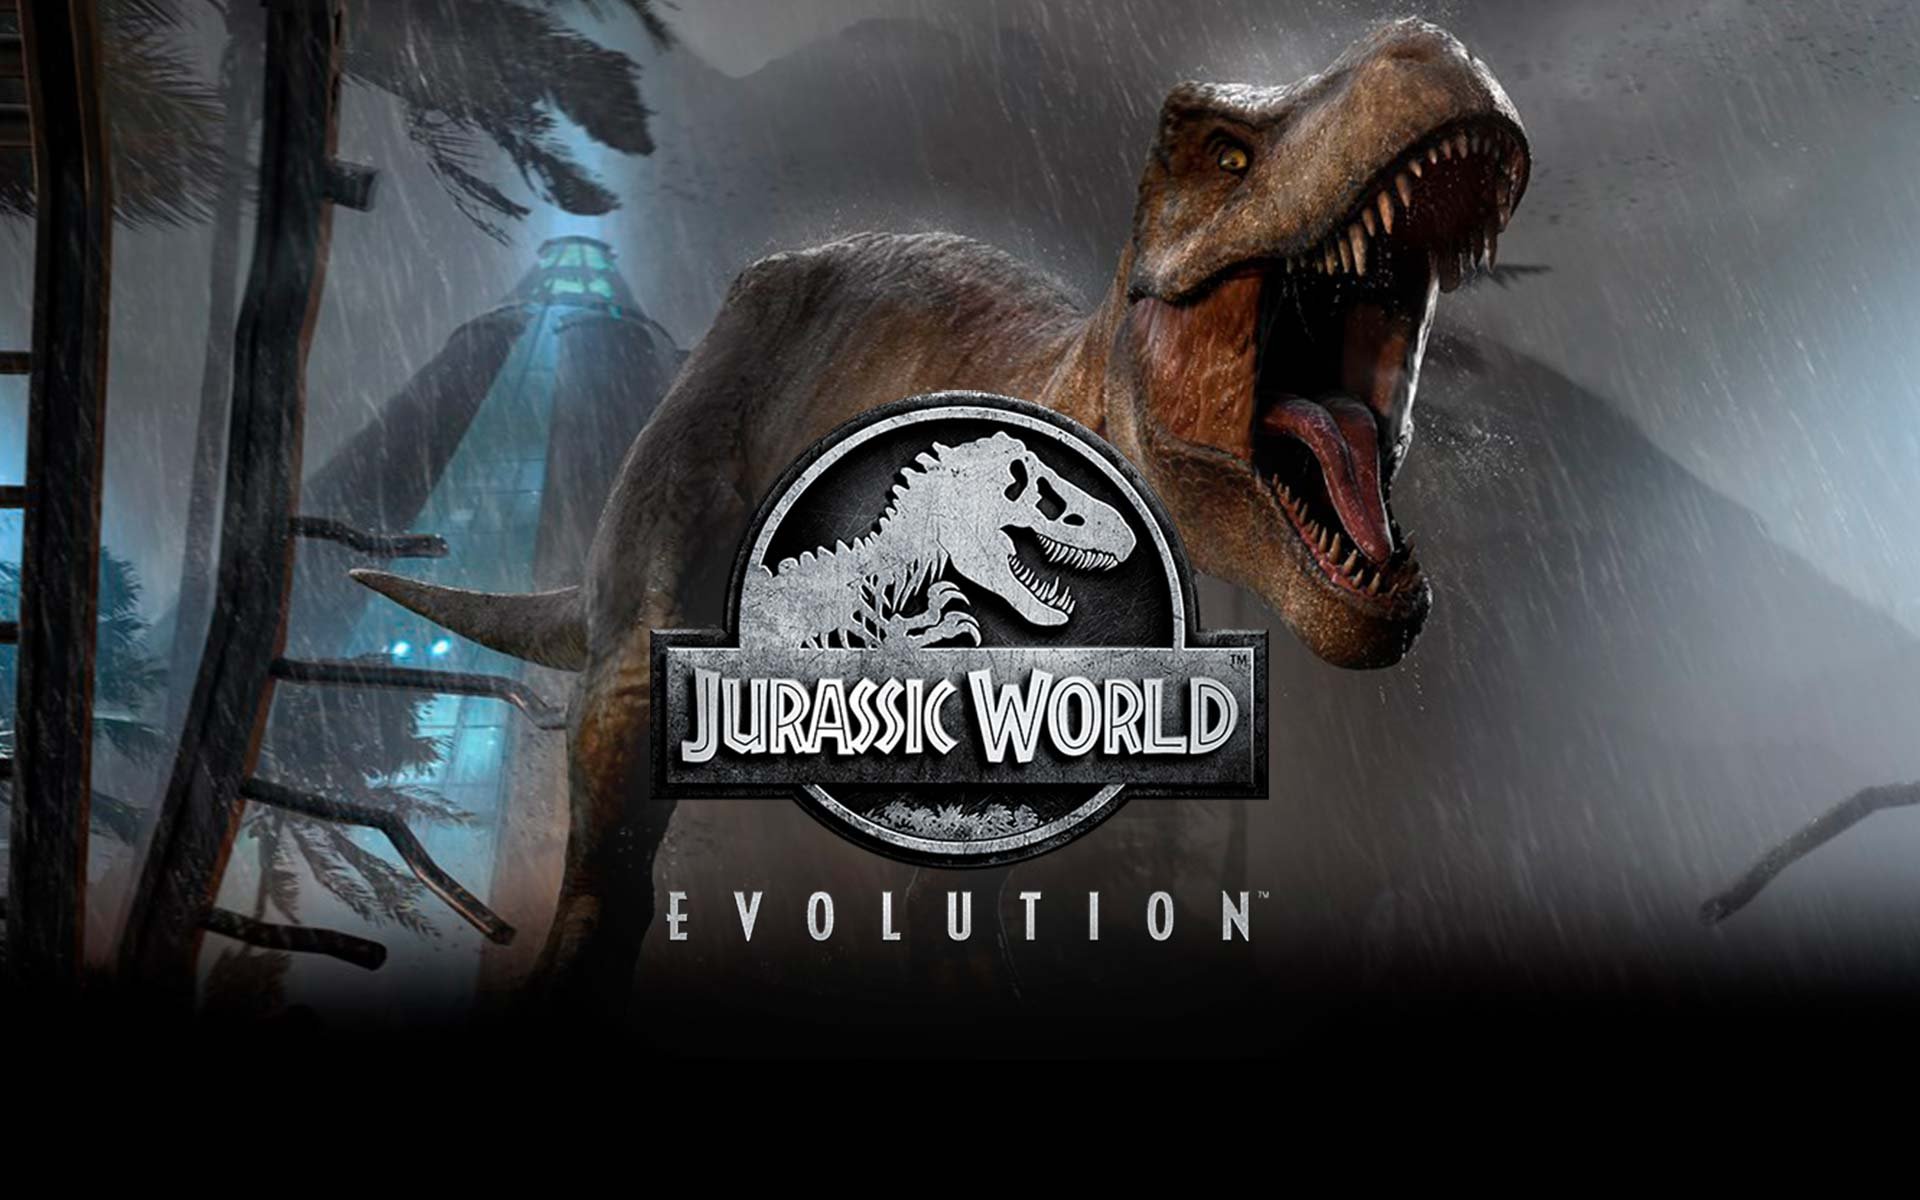 Compre Jurassic World Evolution a partir de R$ 79.99